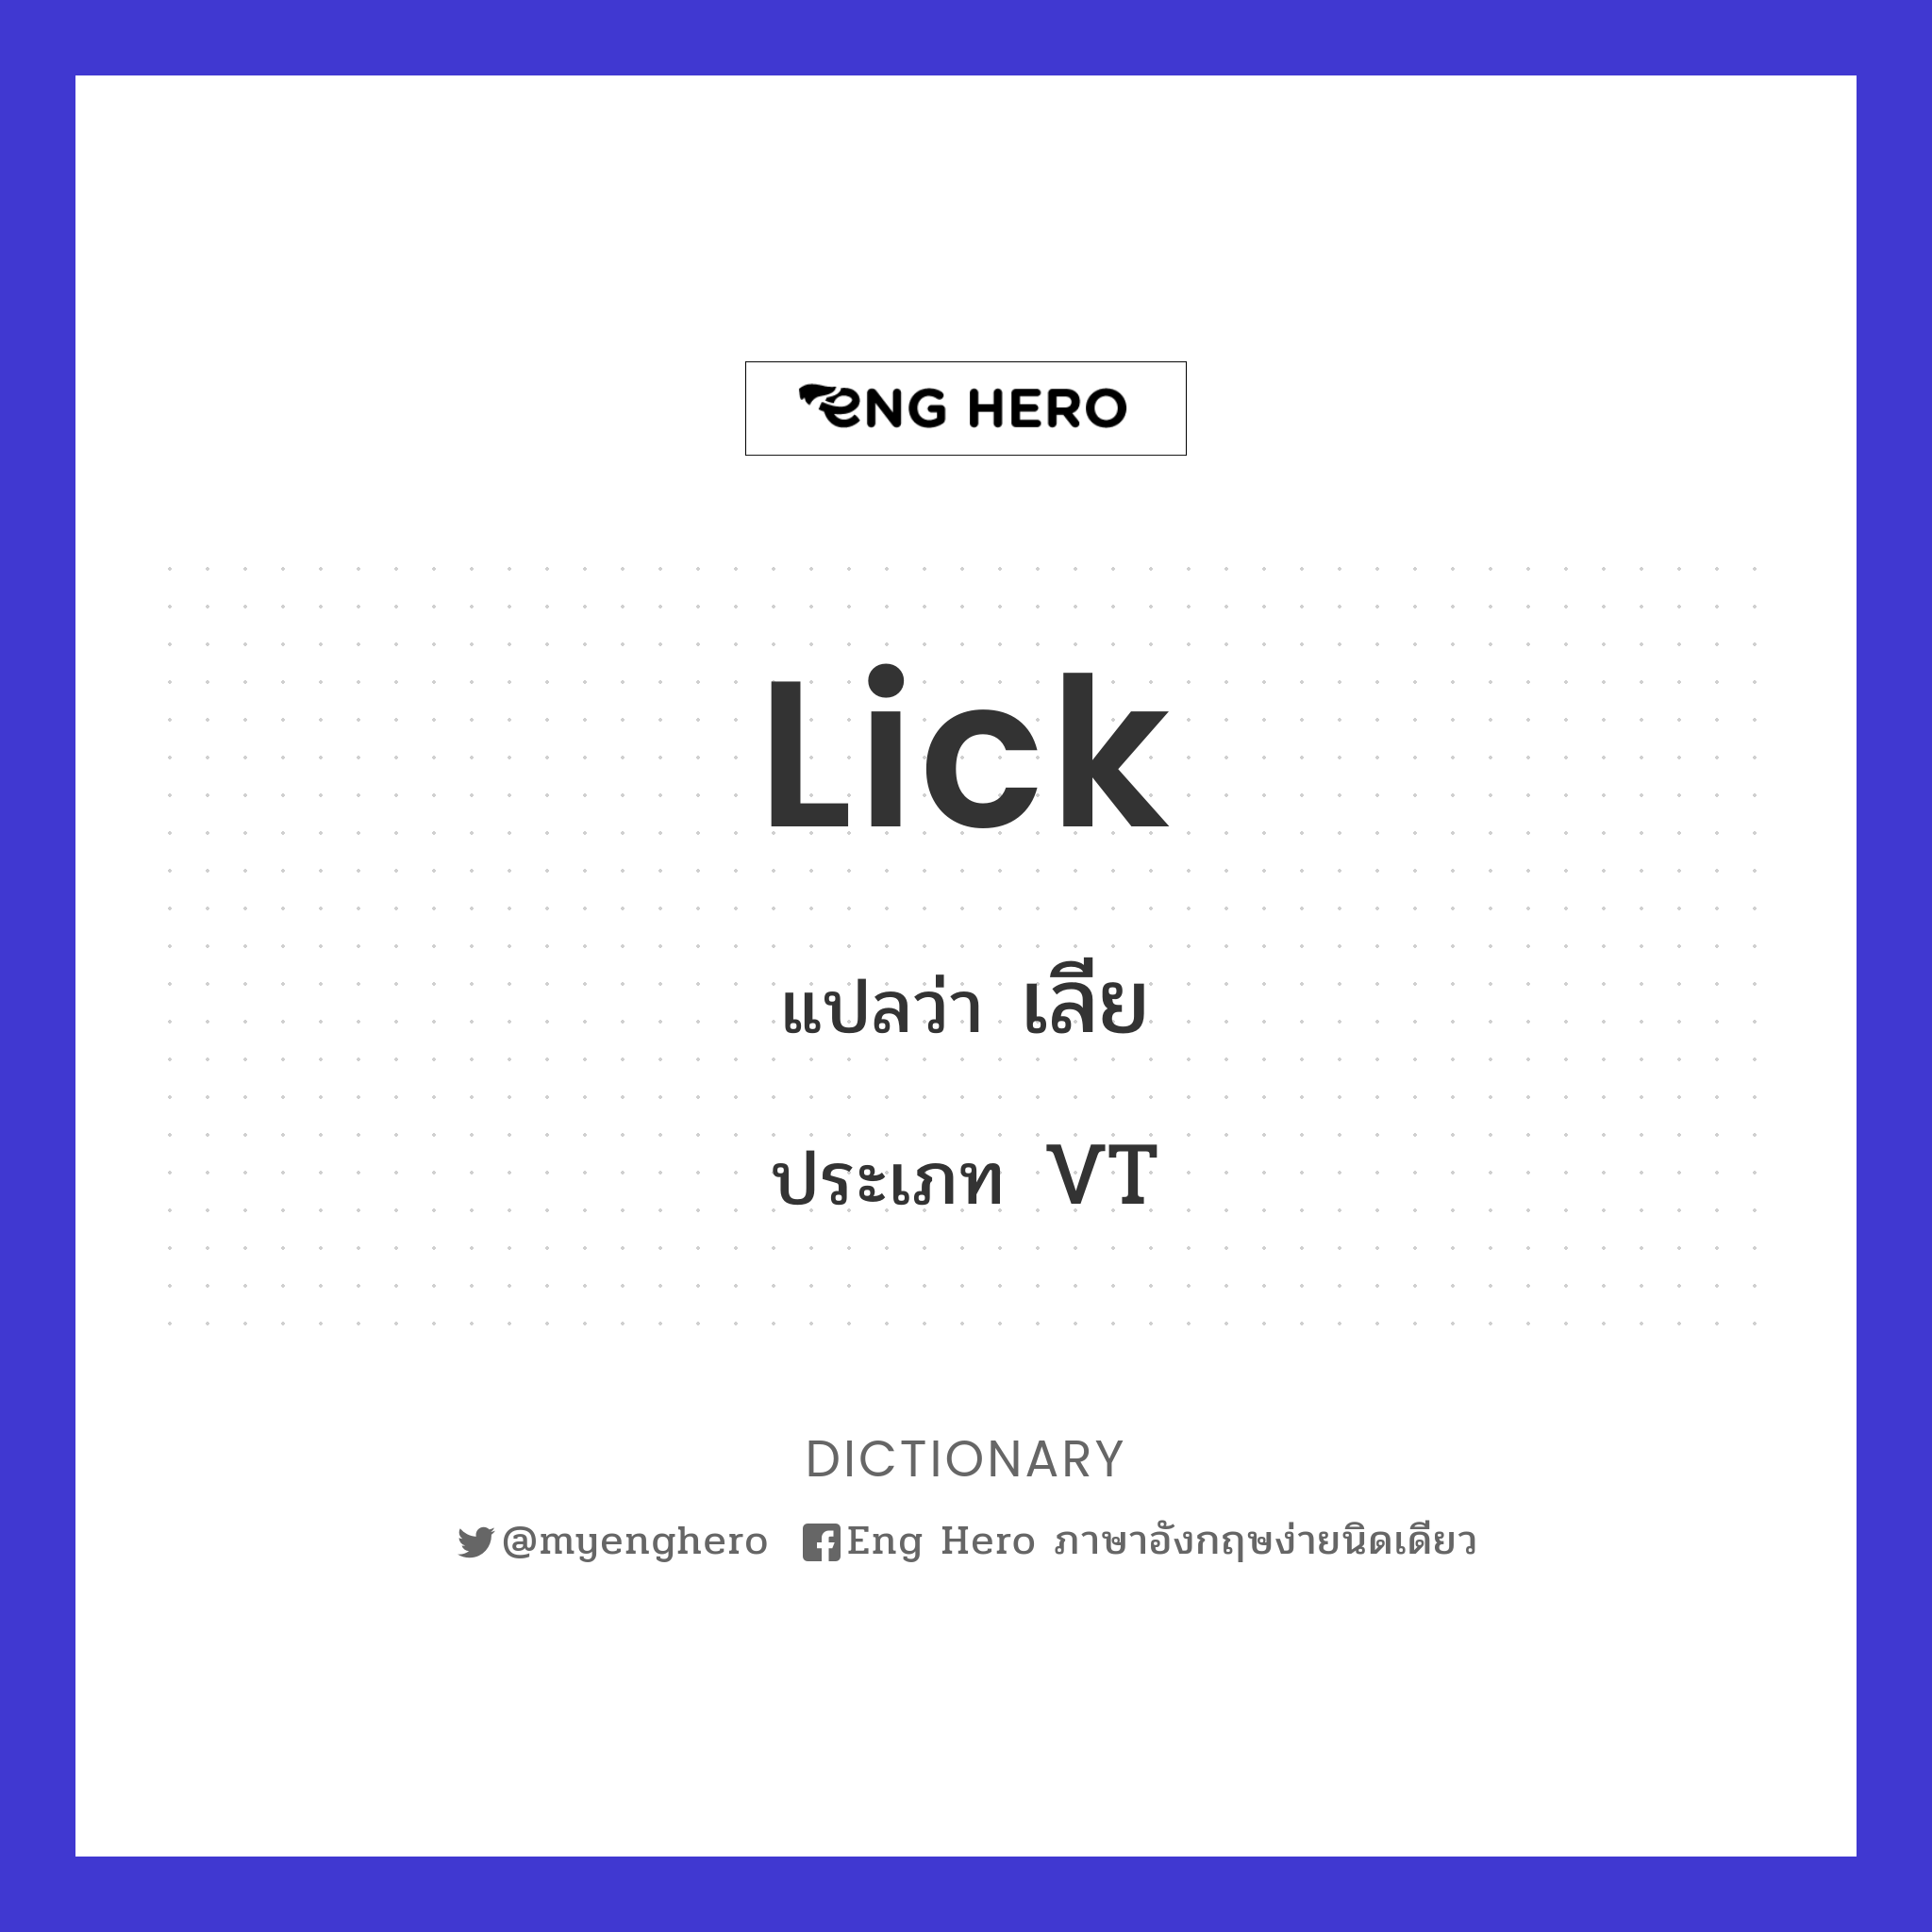 lick